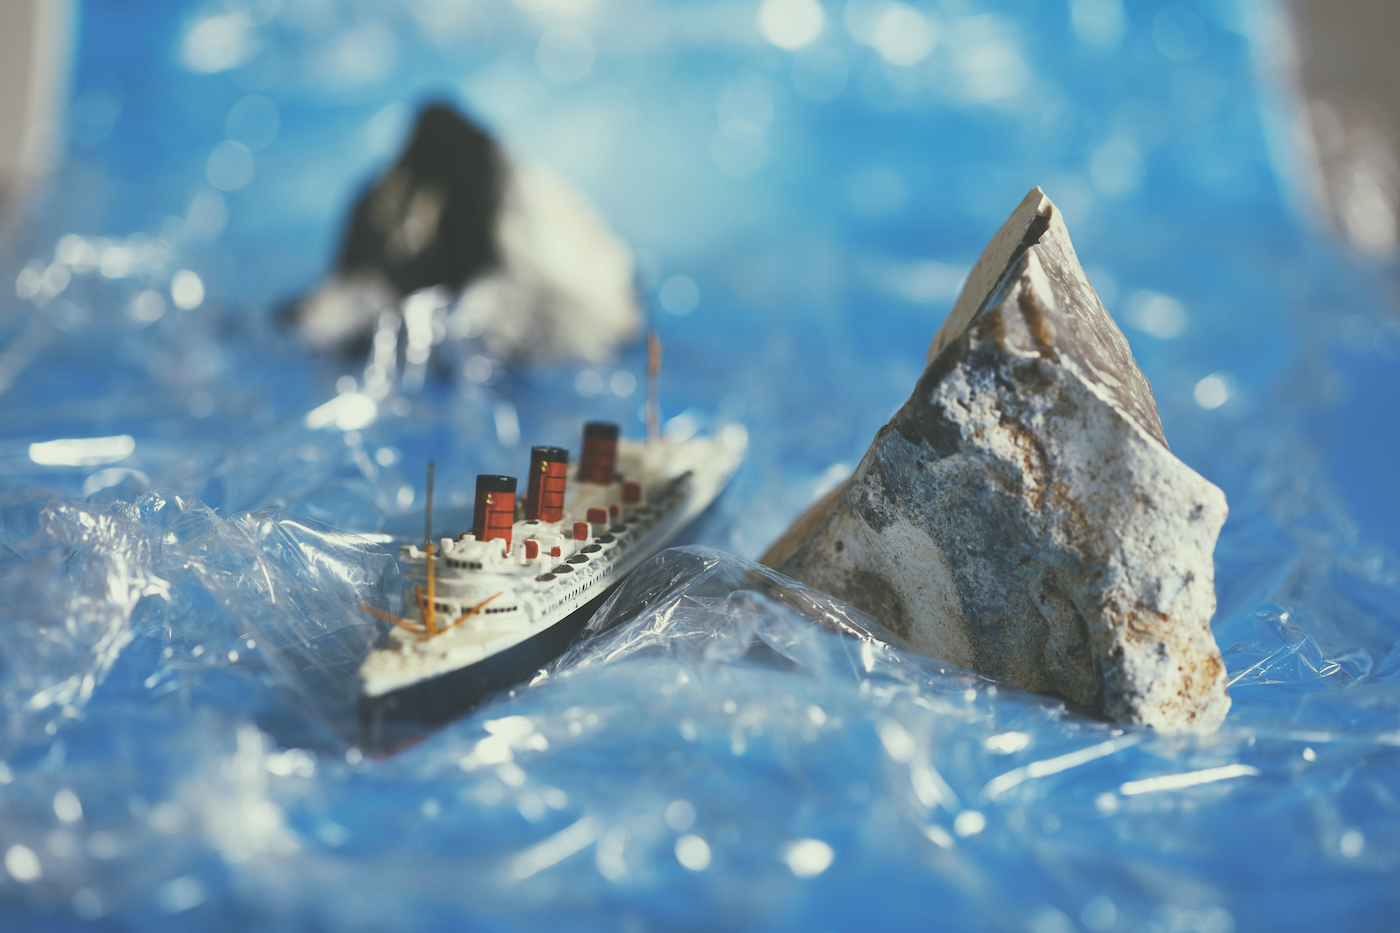 Flints with a miniature model of a homemade passenger ship